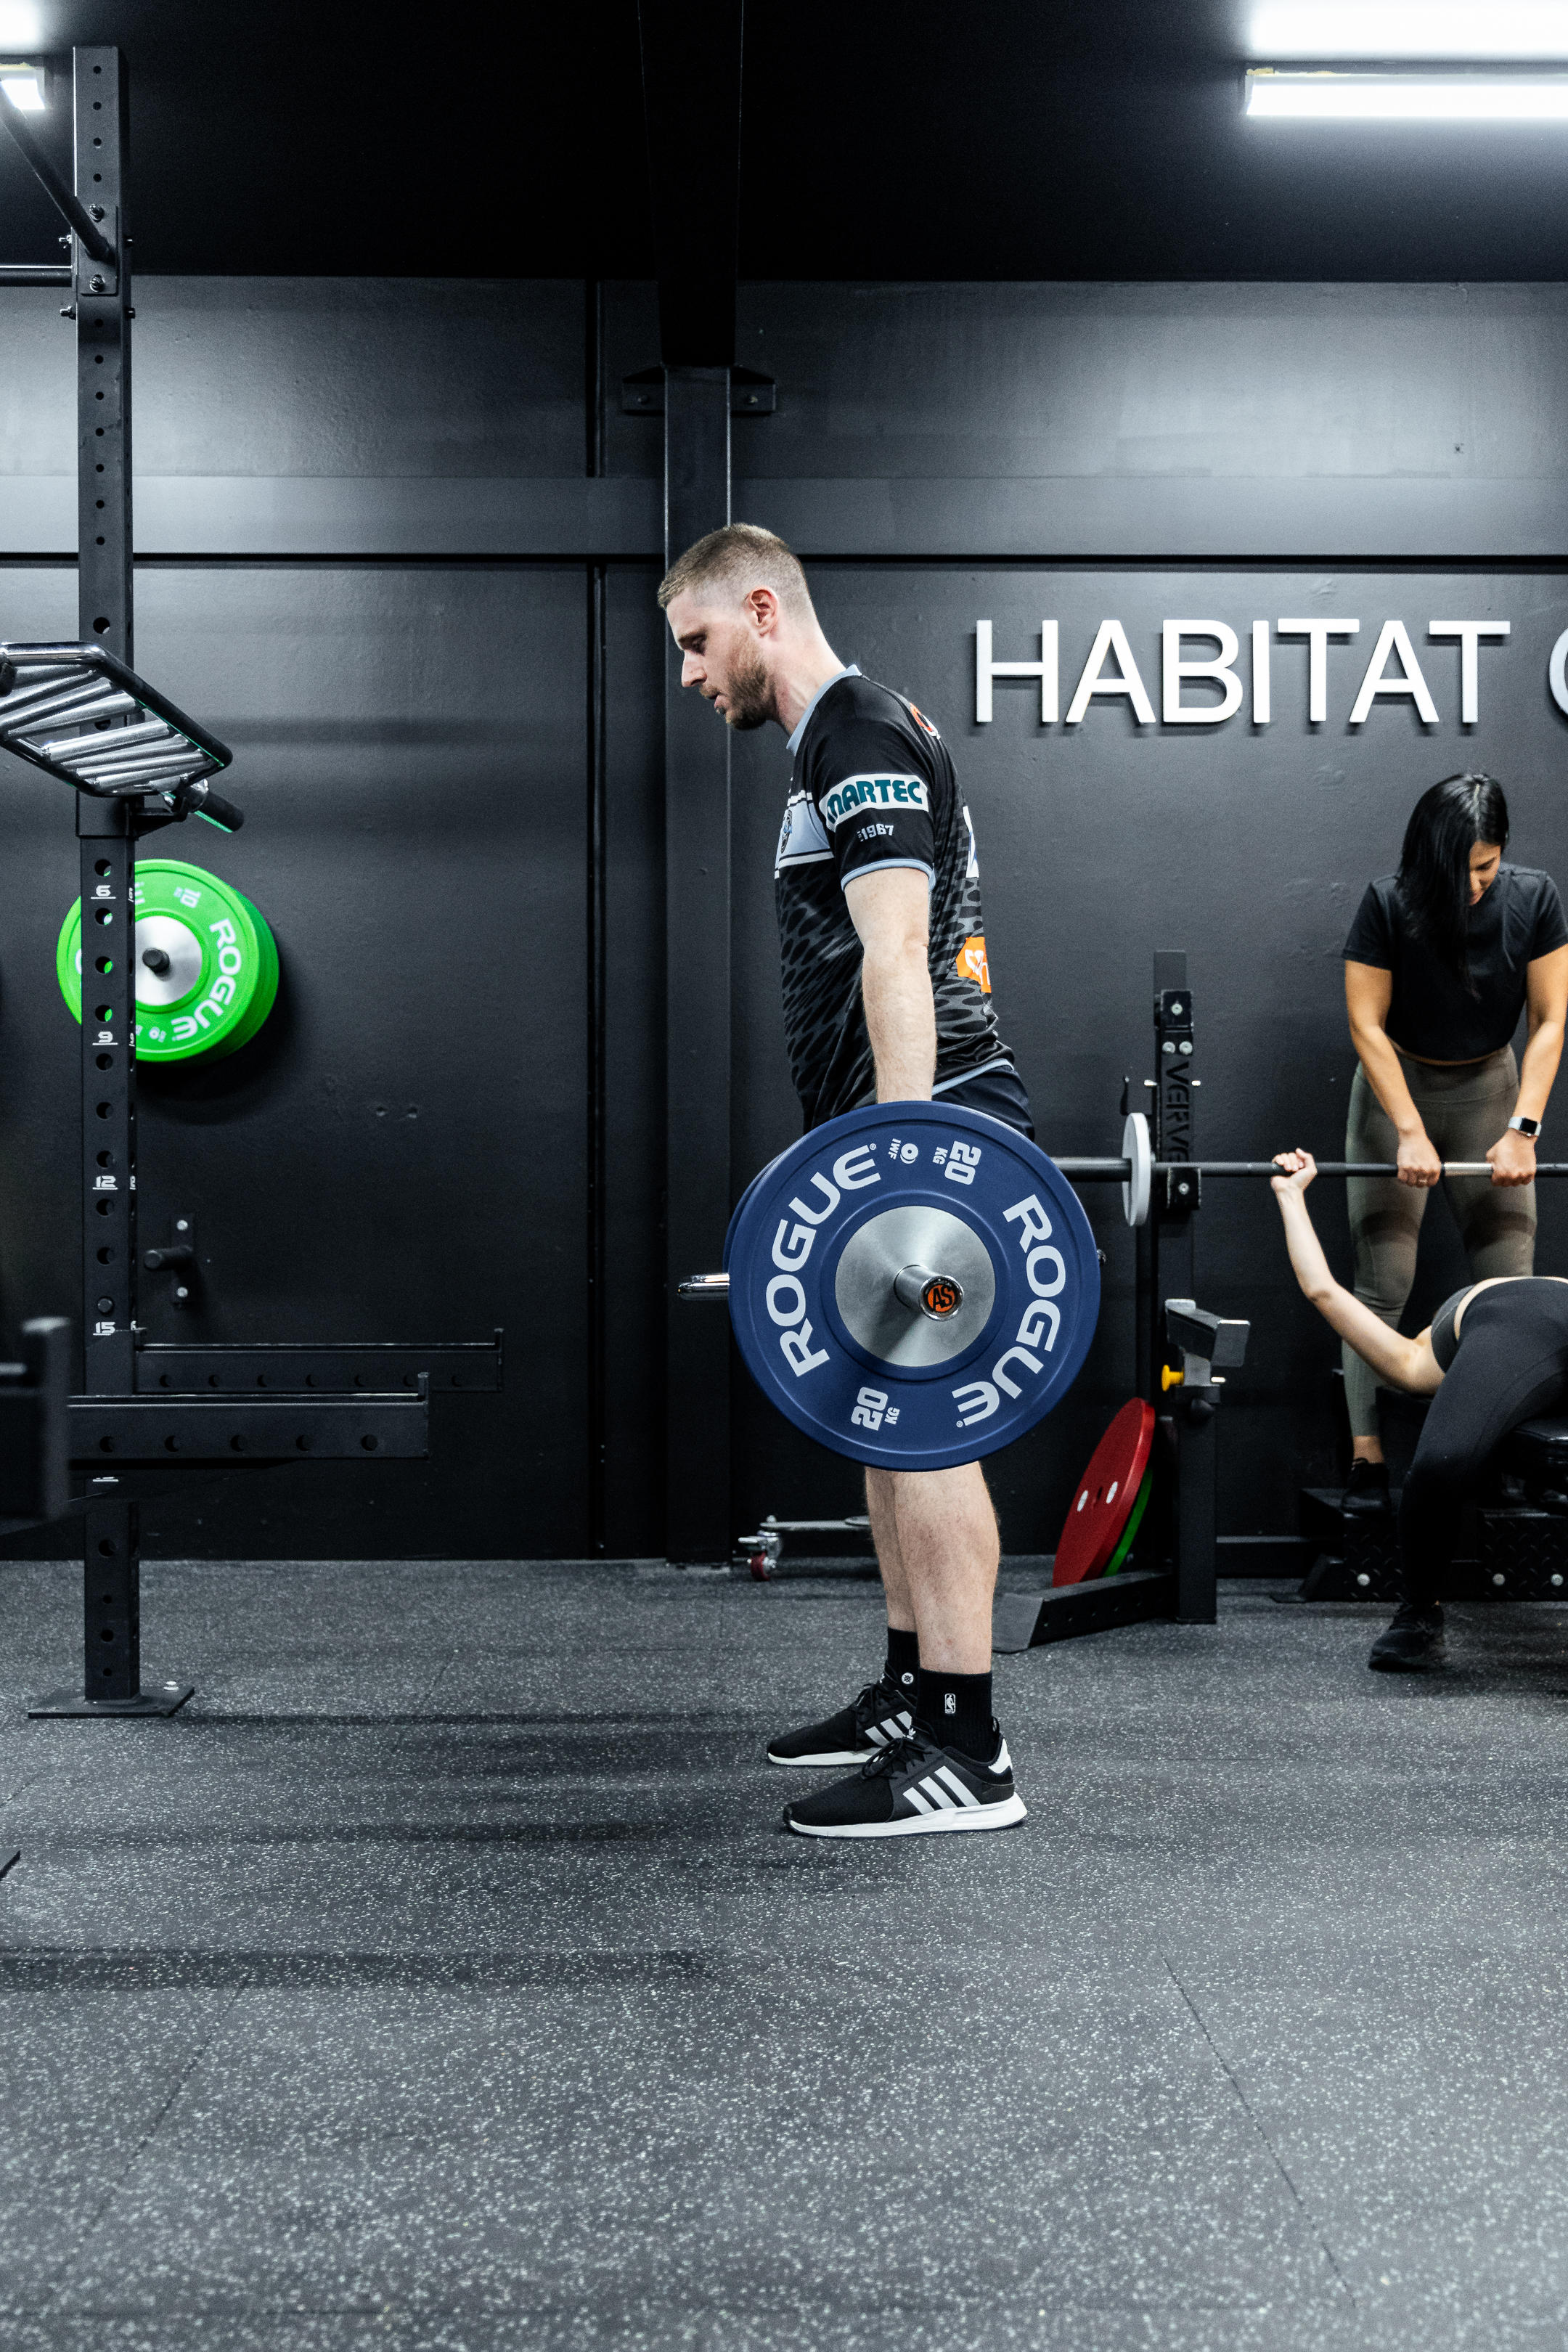 Personal training at Habitat Gym Habitat Gym Prestons 0483 942 777